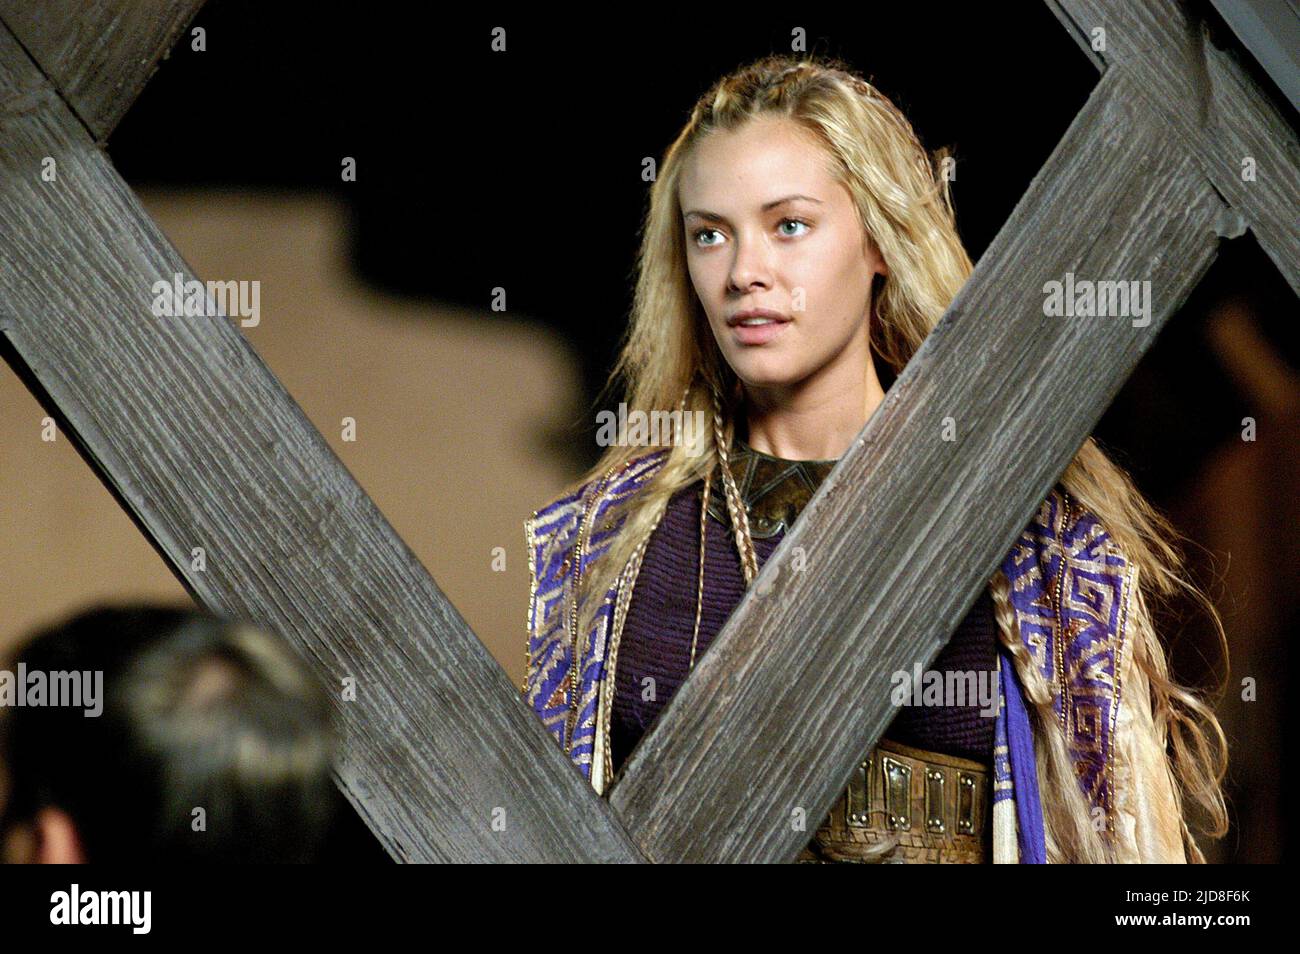 KRISTANNA LOKEN, RING OF THE NIBELUNGS, 2004, Stock Photo